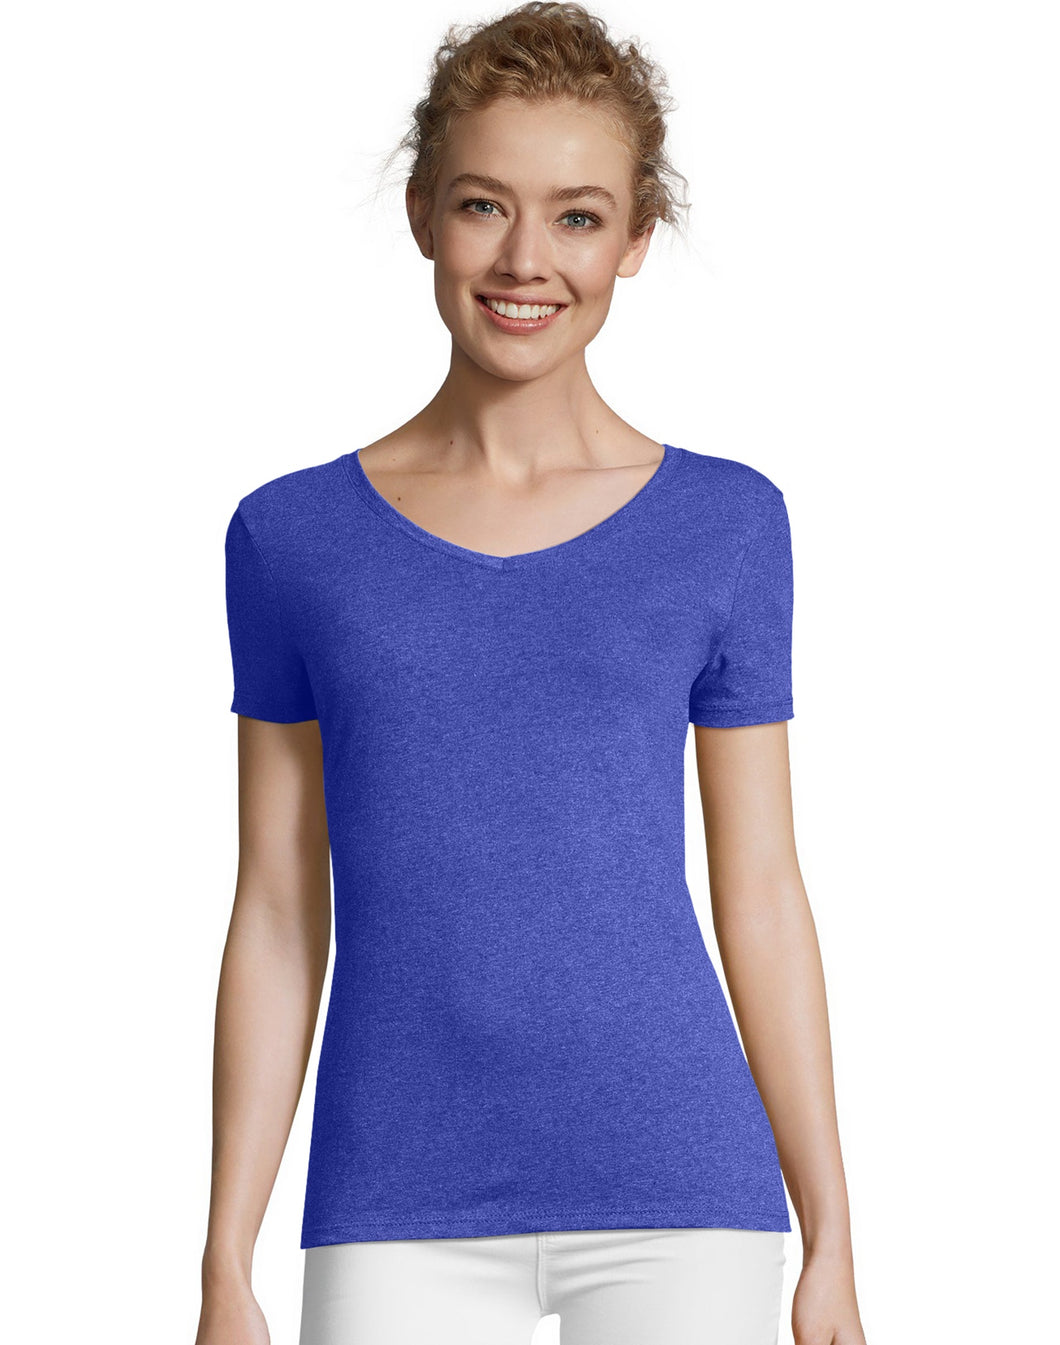 Feat Women's Short Sleeve V-Neck Shirts Loose Casual Tee T-Shirt